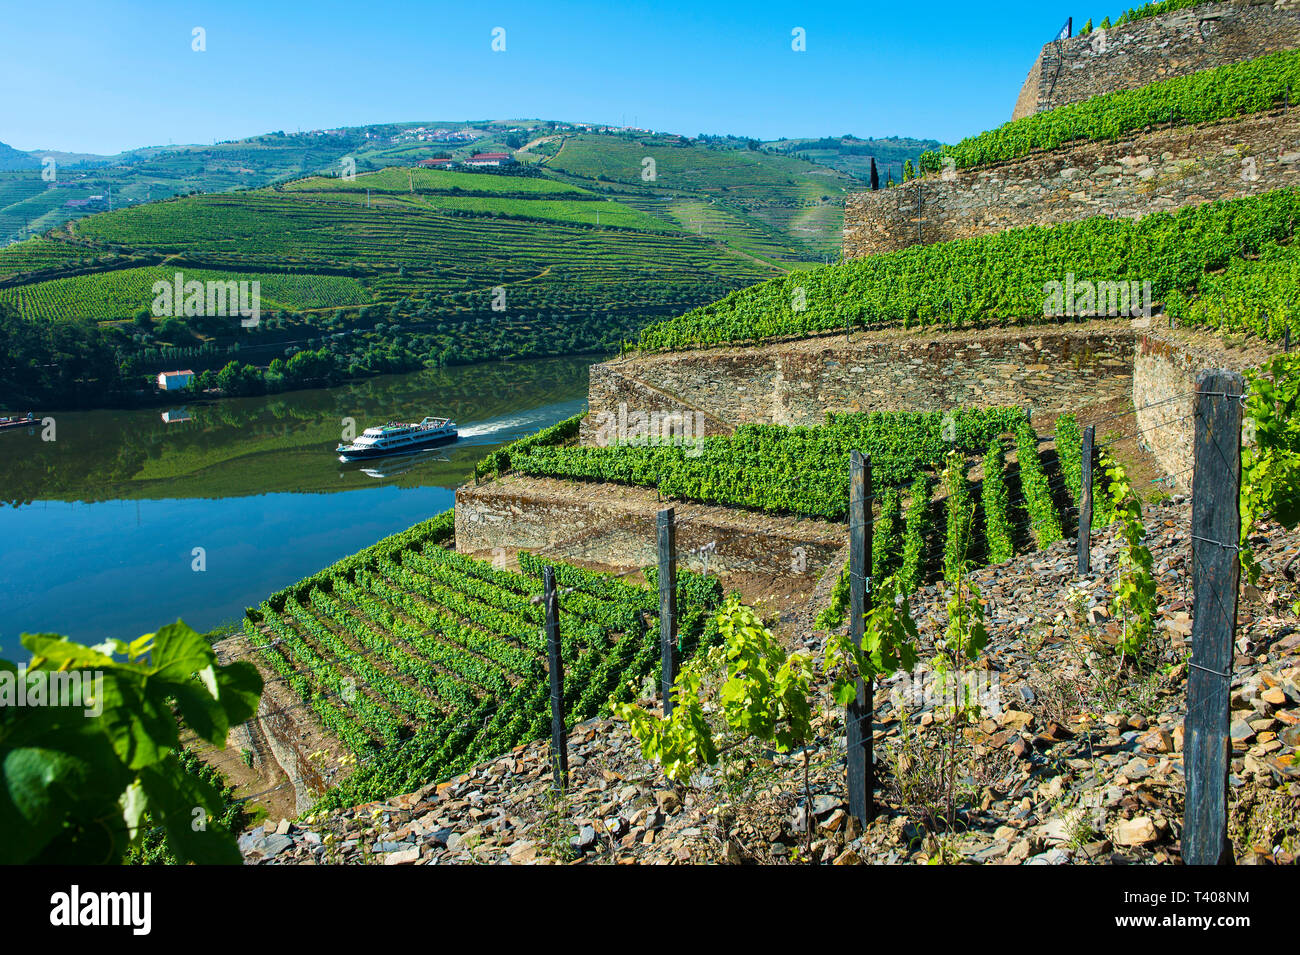 Im Weinberg Hölle Valley, Vale do Inferno, über dem Fluss Douro Weingut Quinta de la Rosa, Pinhao, Douro-tal, Portugal Stockfoto